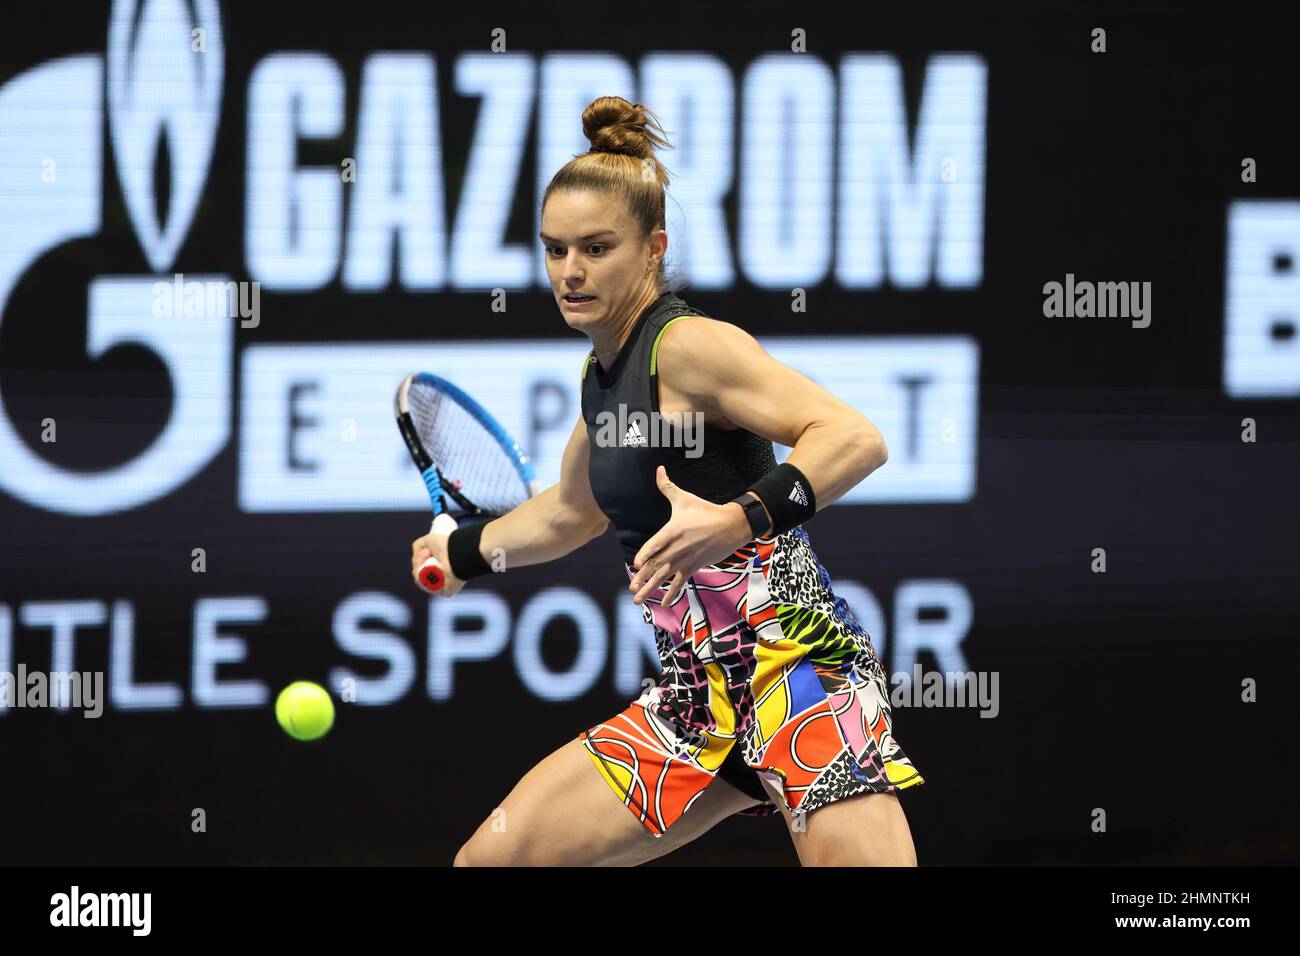 Maria Sakkari of Greece plays against Elise Mertens of Belgium during the St